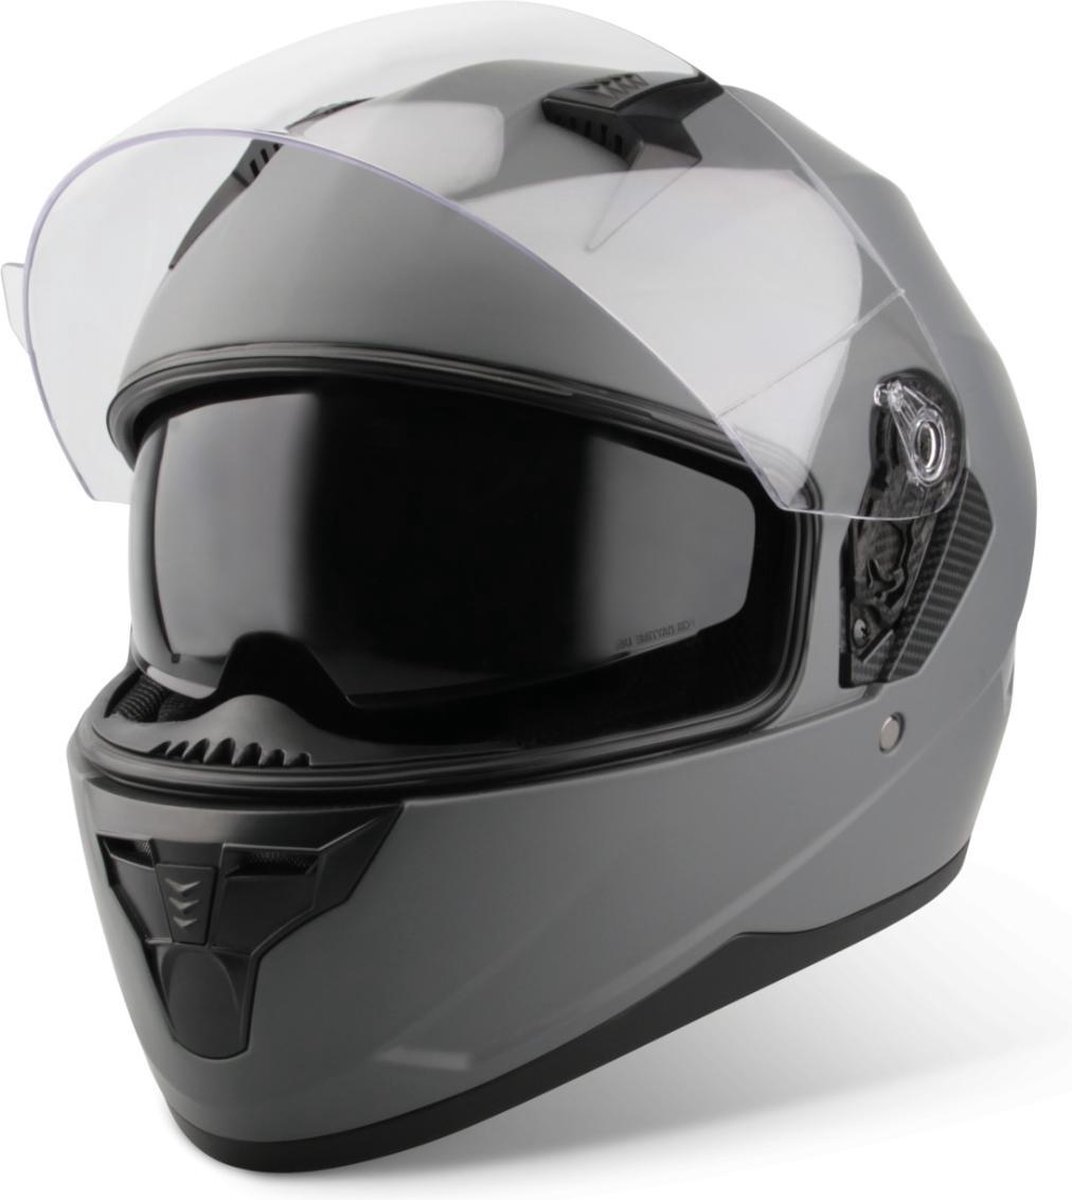 VINZ Kennet Integraalhelm met Zonnevizier / Motorhelm / Scooter helm / Brommerhelm – Titanium